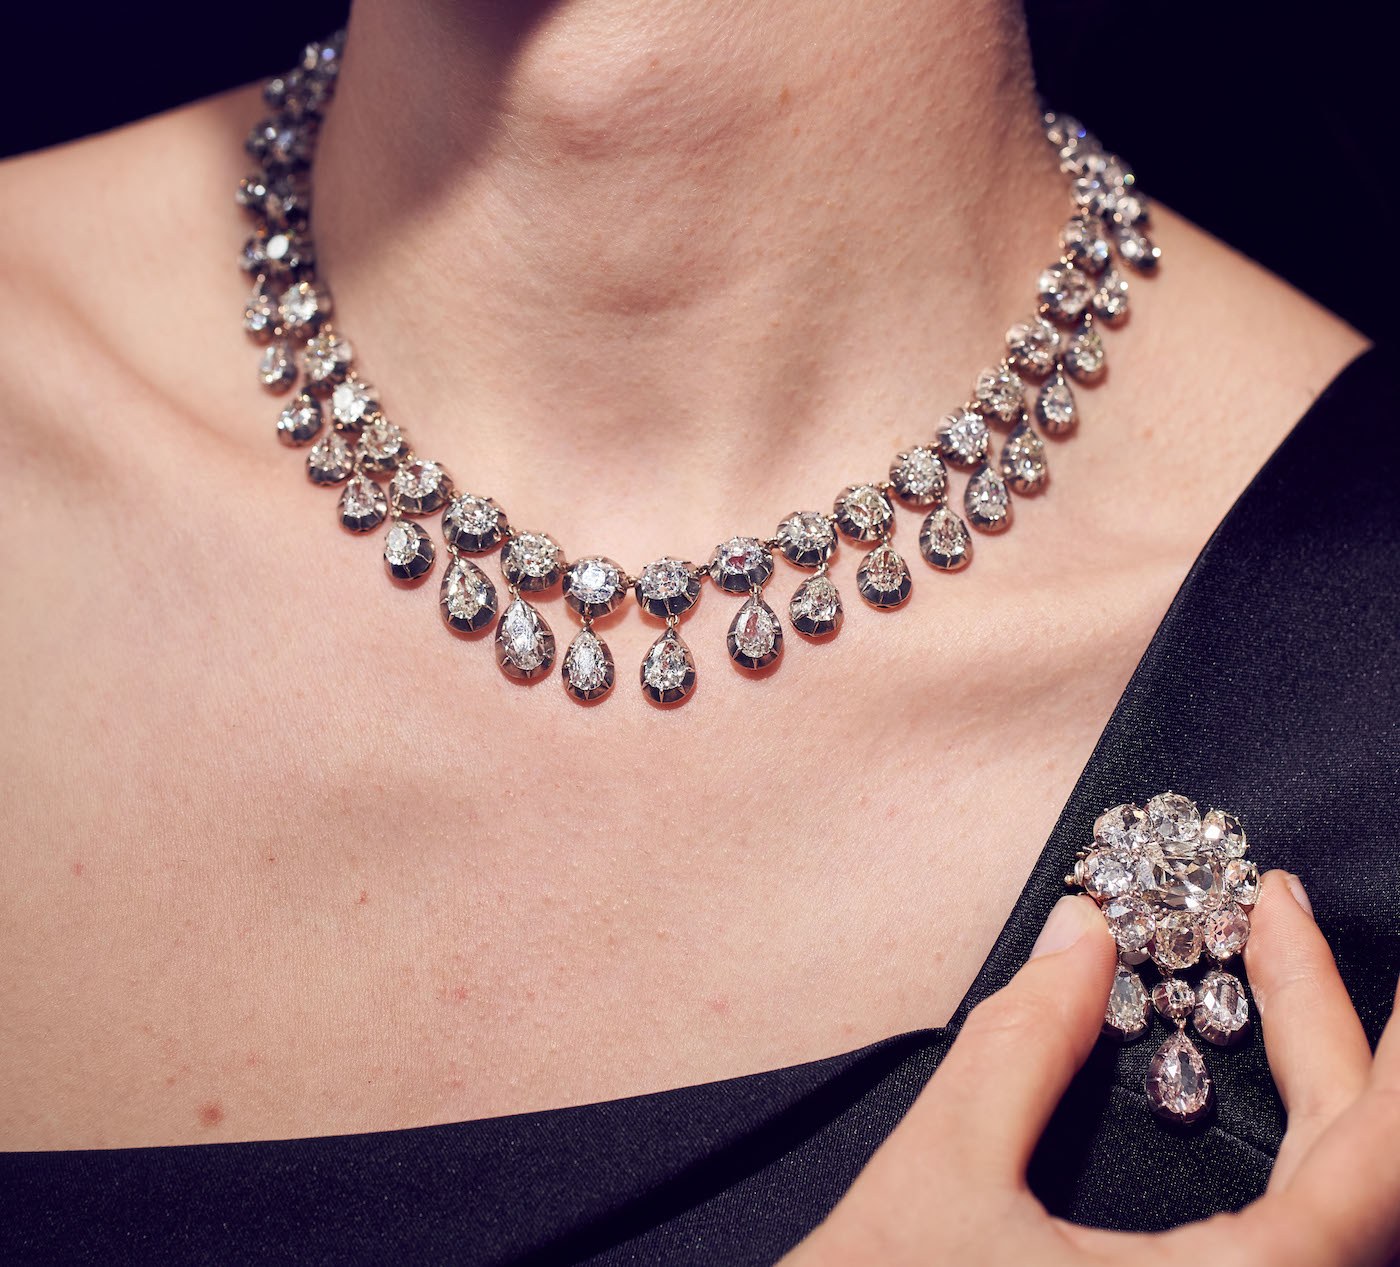 Image result for Marie Antoinetteâs jewelry on display in Dubai before auction